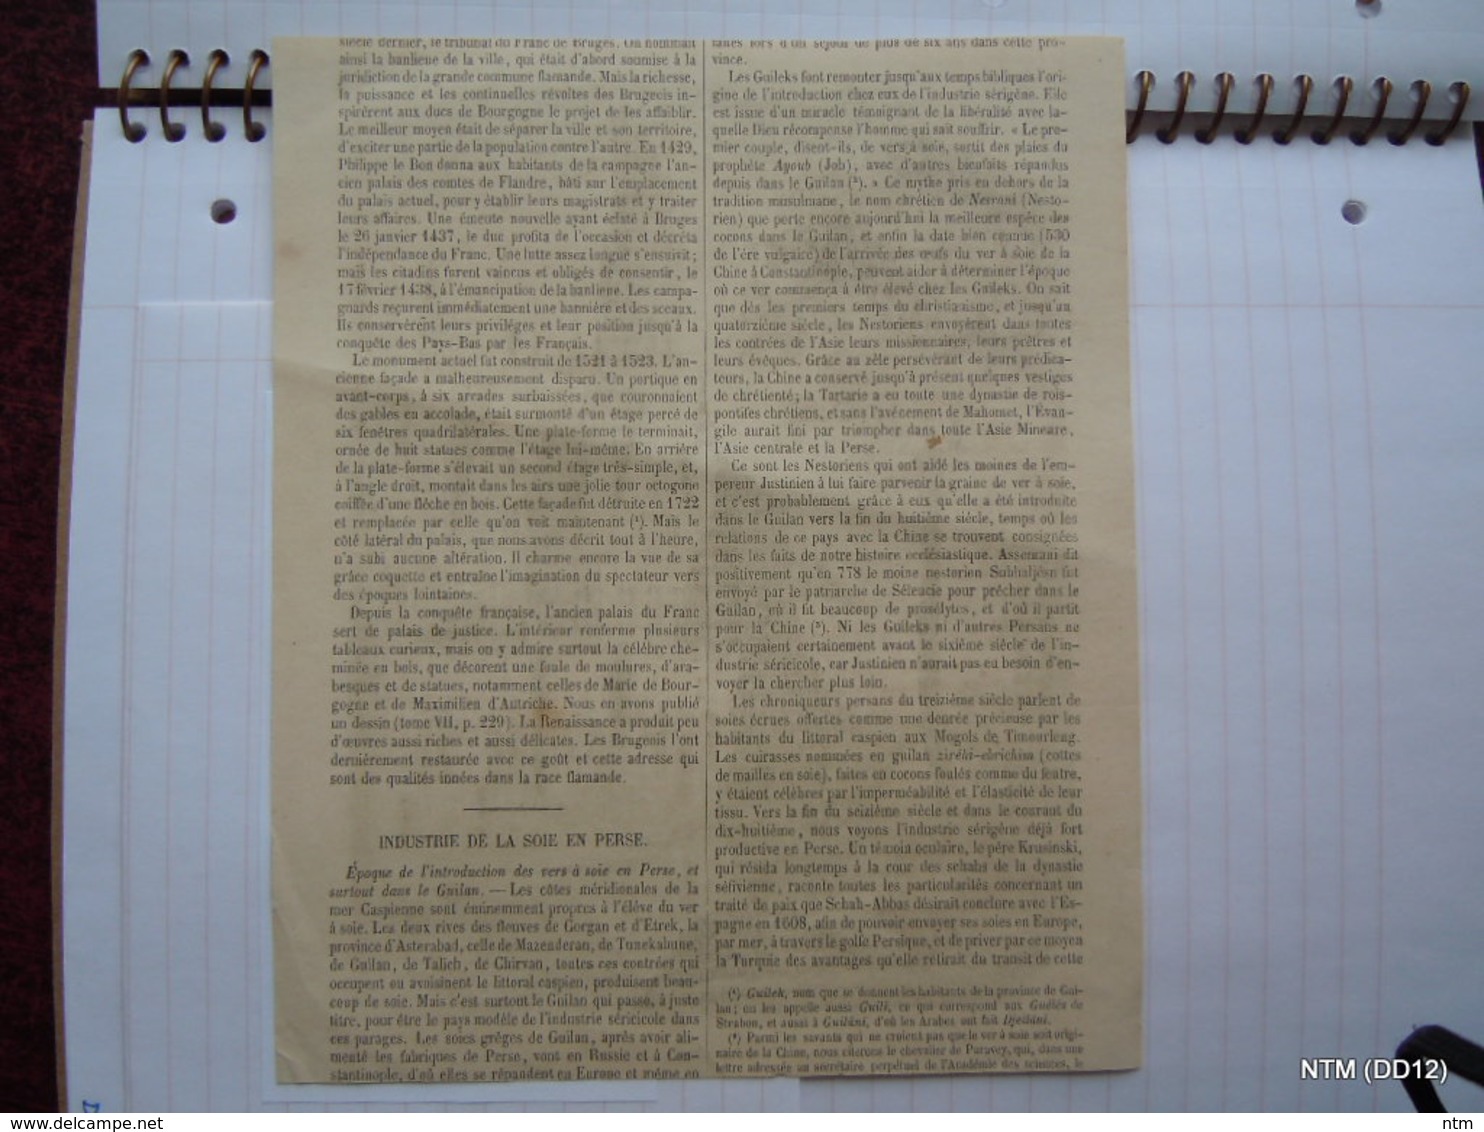 BELGIUM News Paper Cutting. Scene Of 'Justice Of Palace' At Brugges In Belgium. - 1850 - 1899